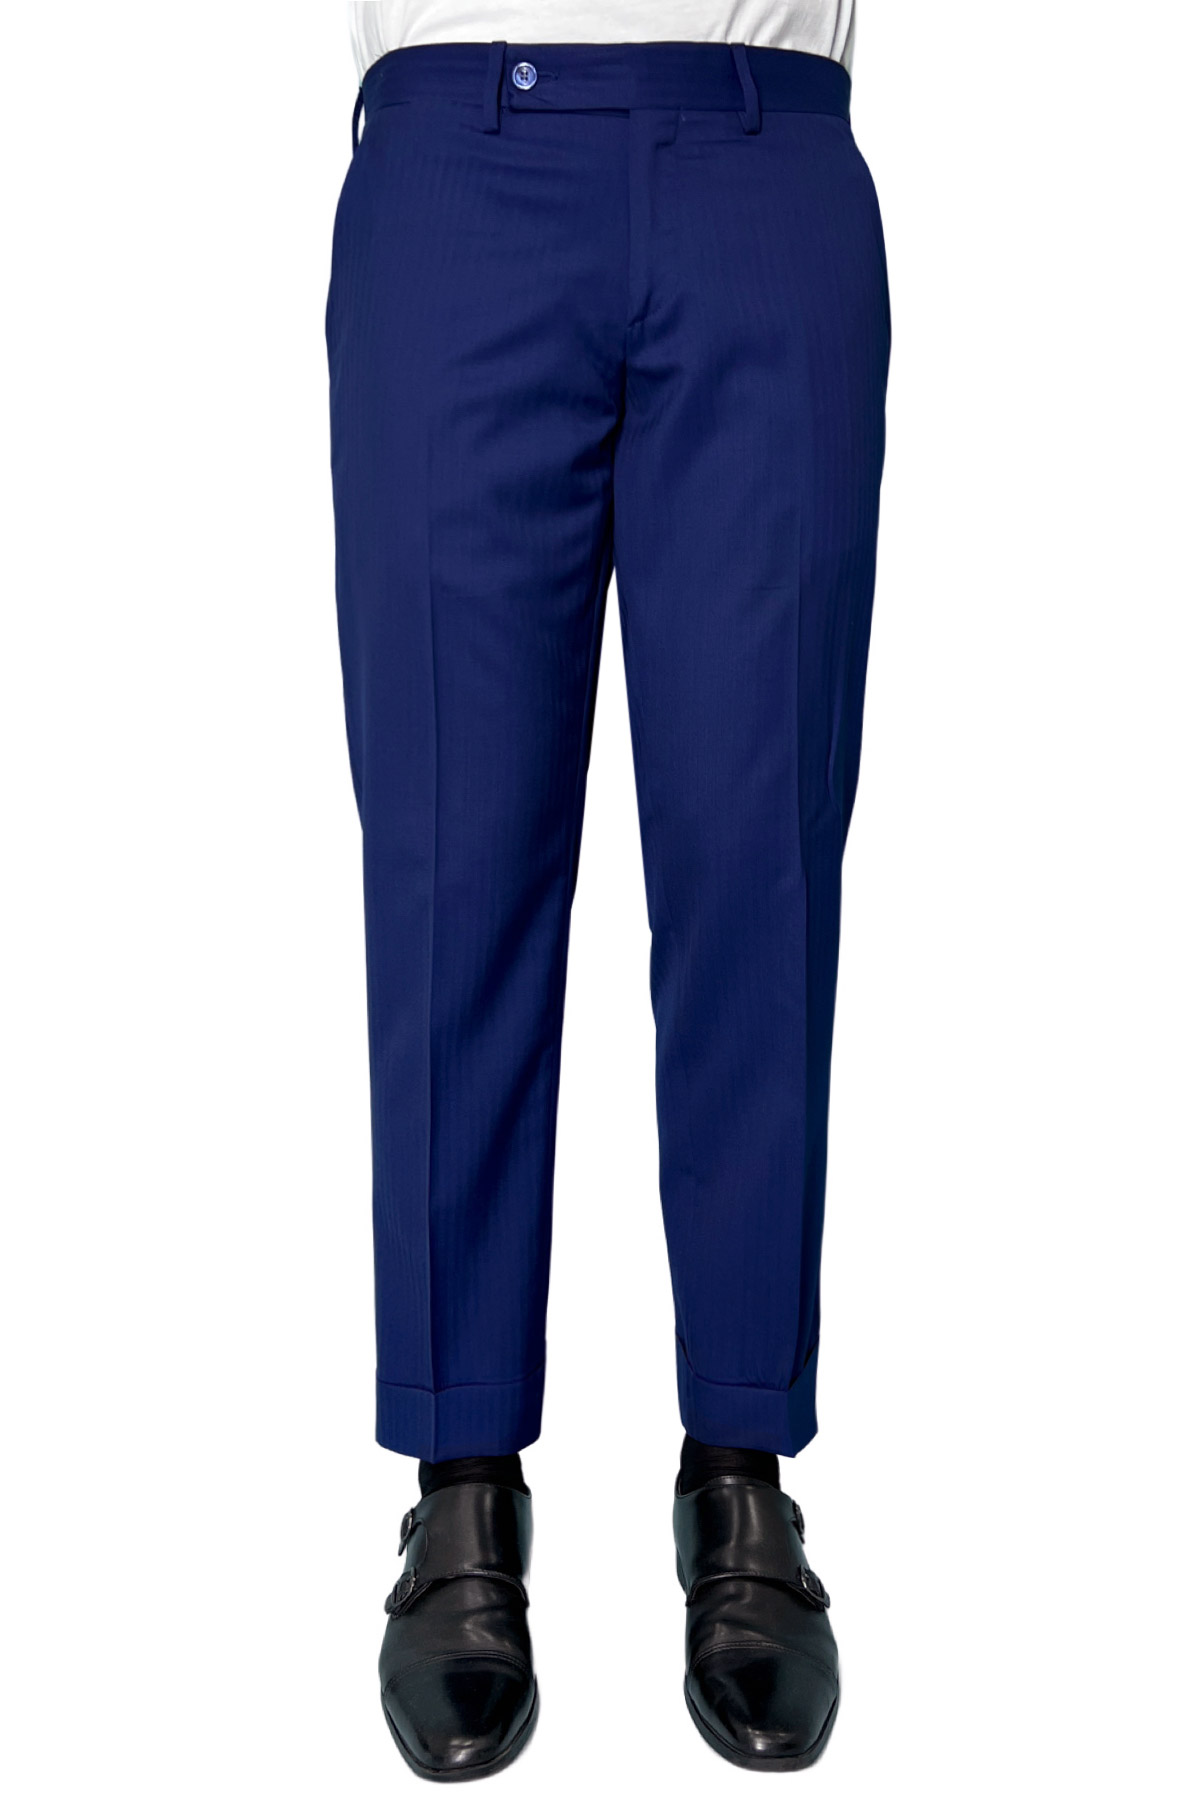 Pantalone uomo royal blu tasca america in fresco lana e seta Solaro Holland & Sherry